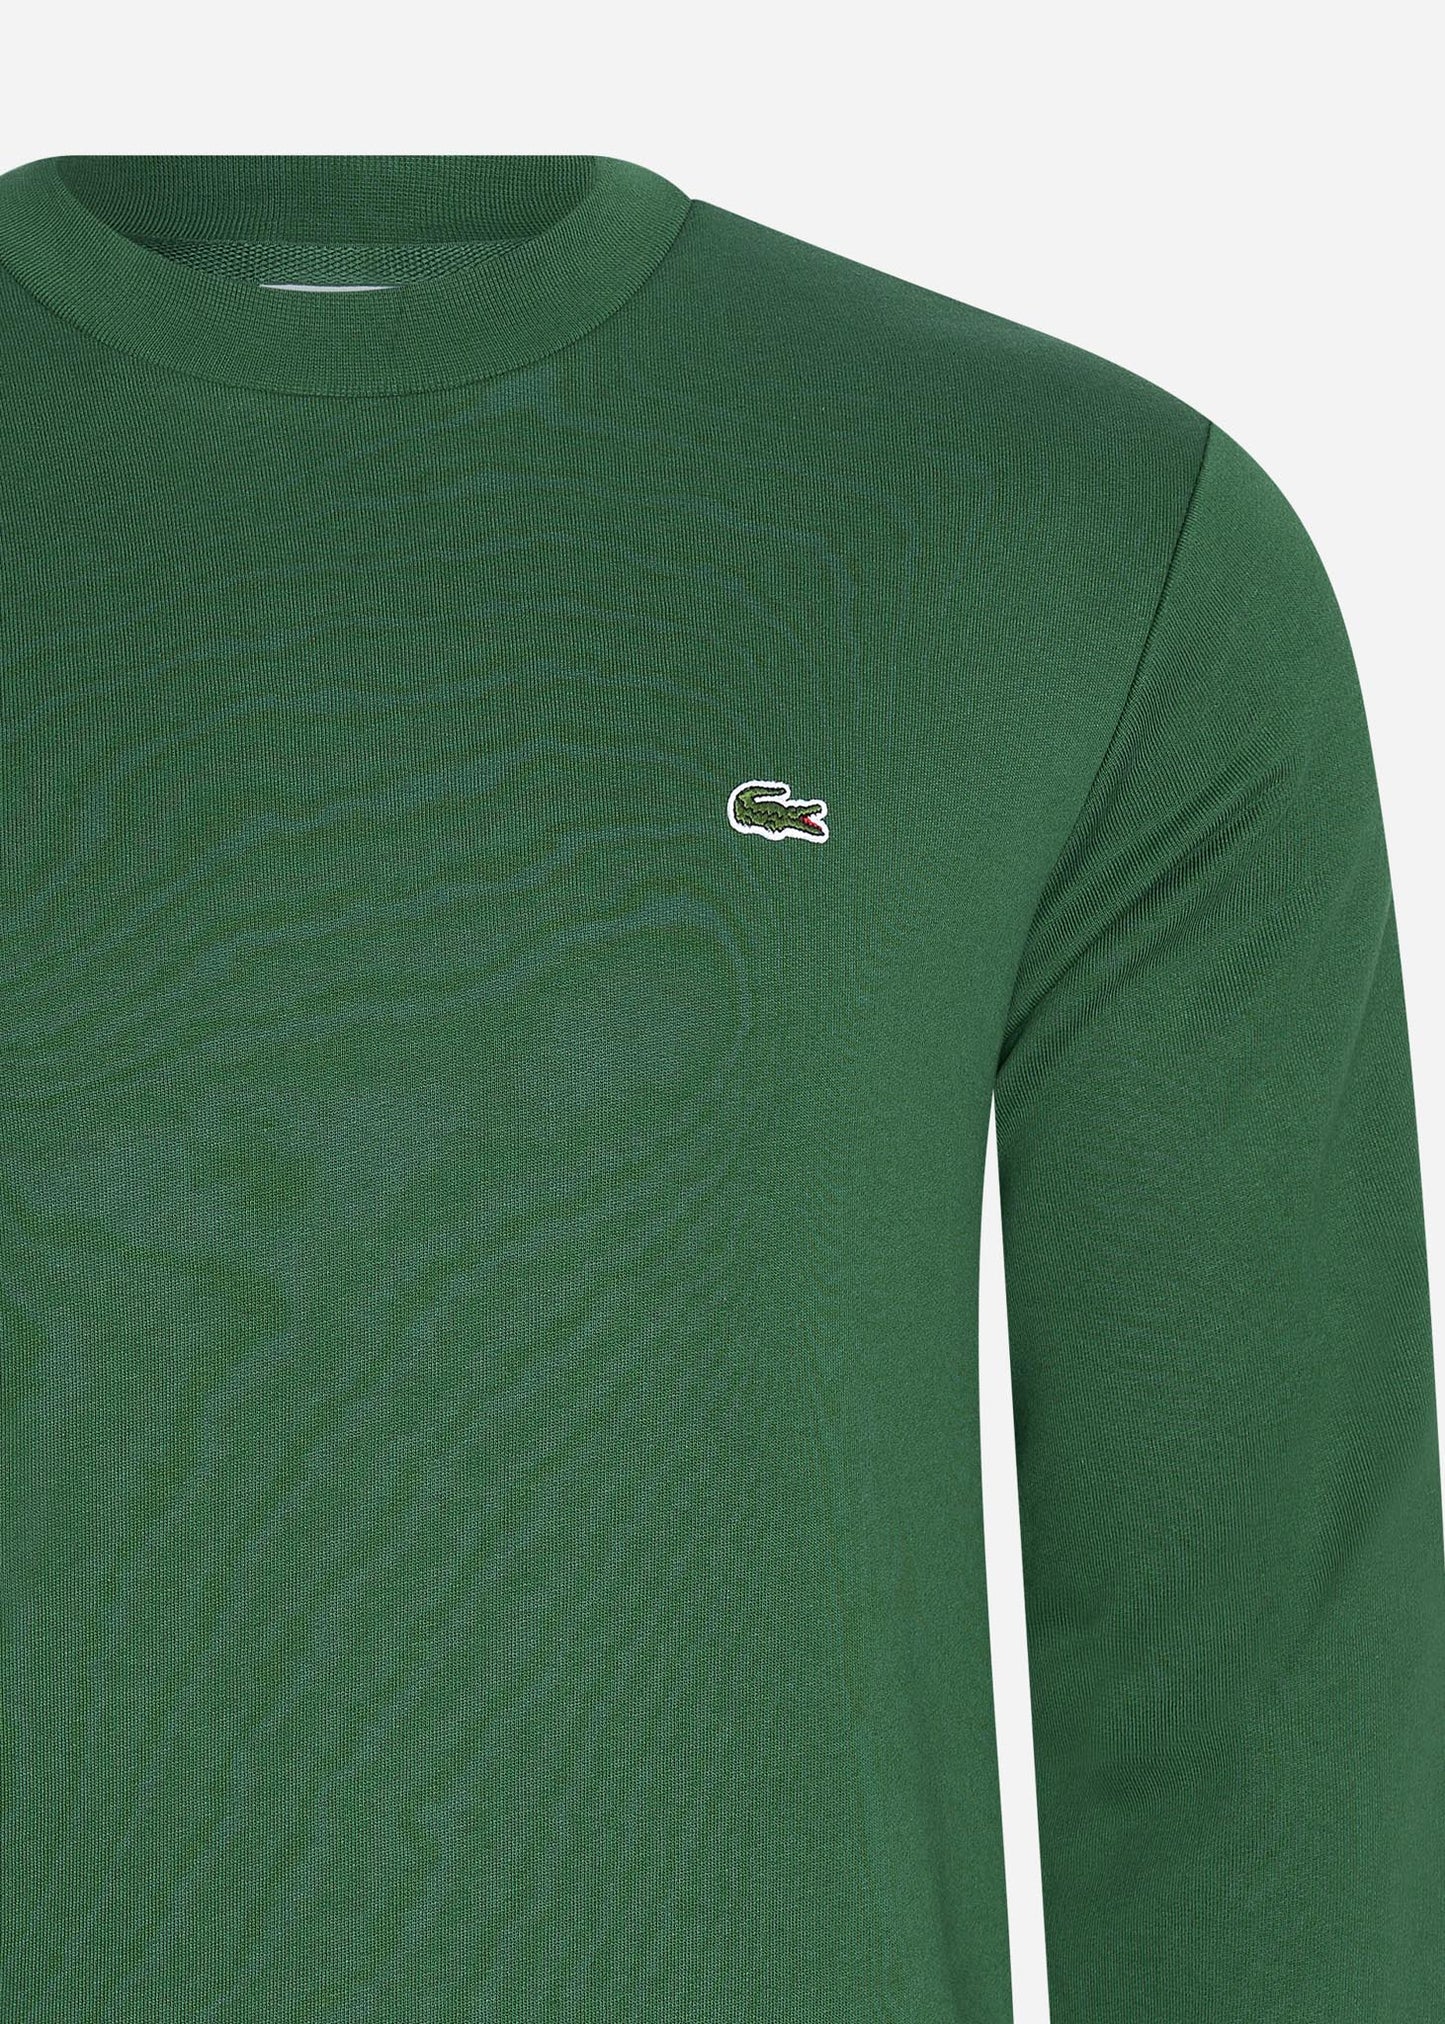 Lacoste sweater green